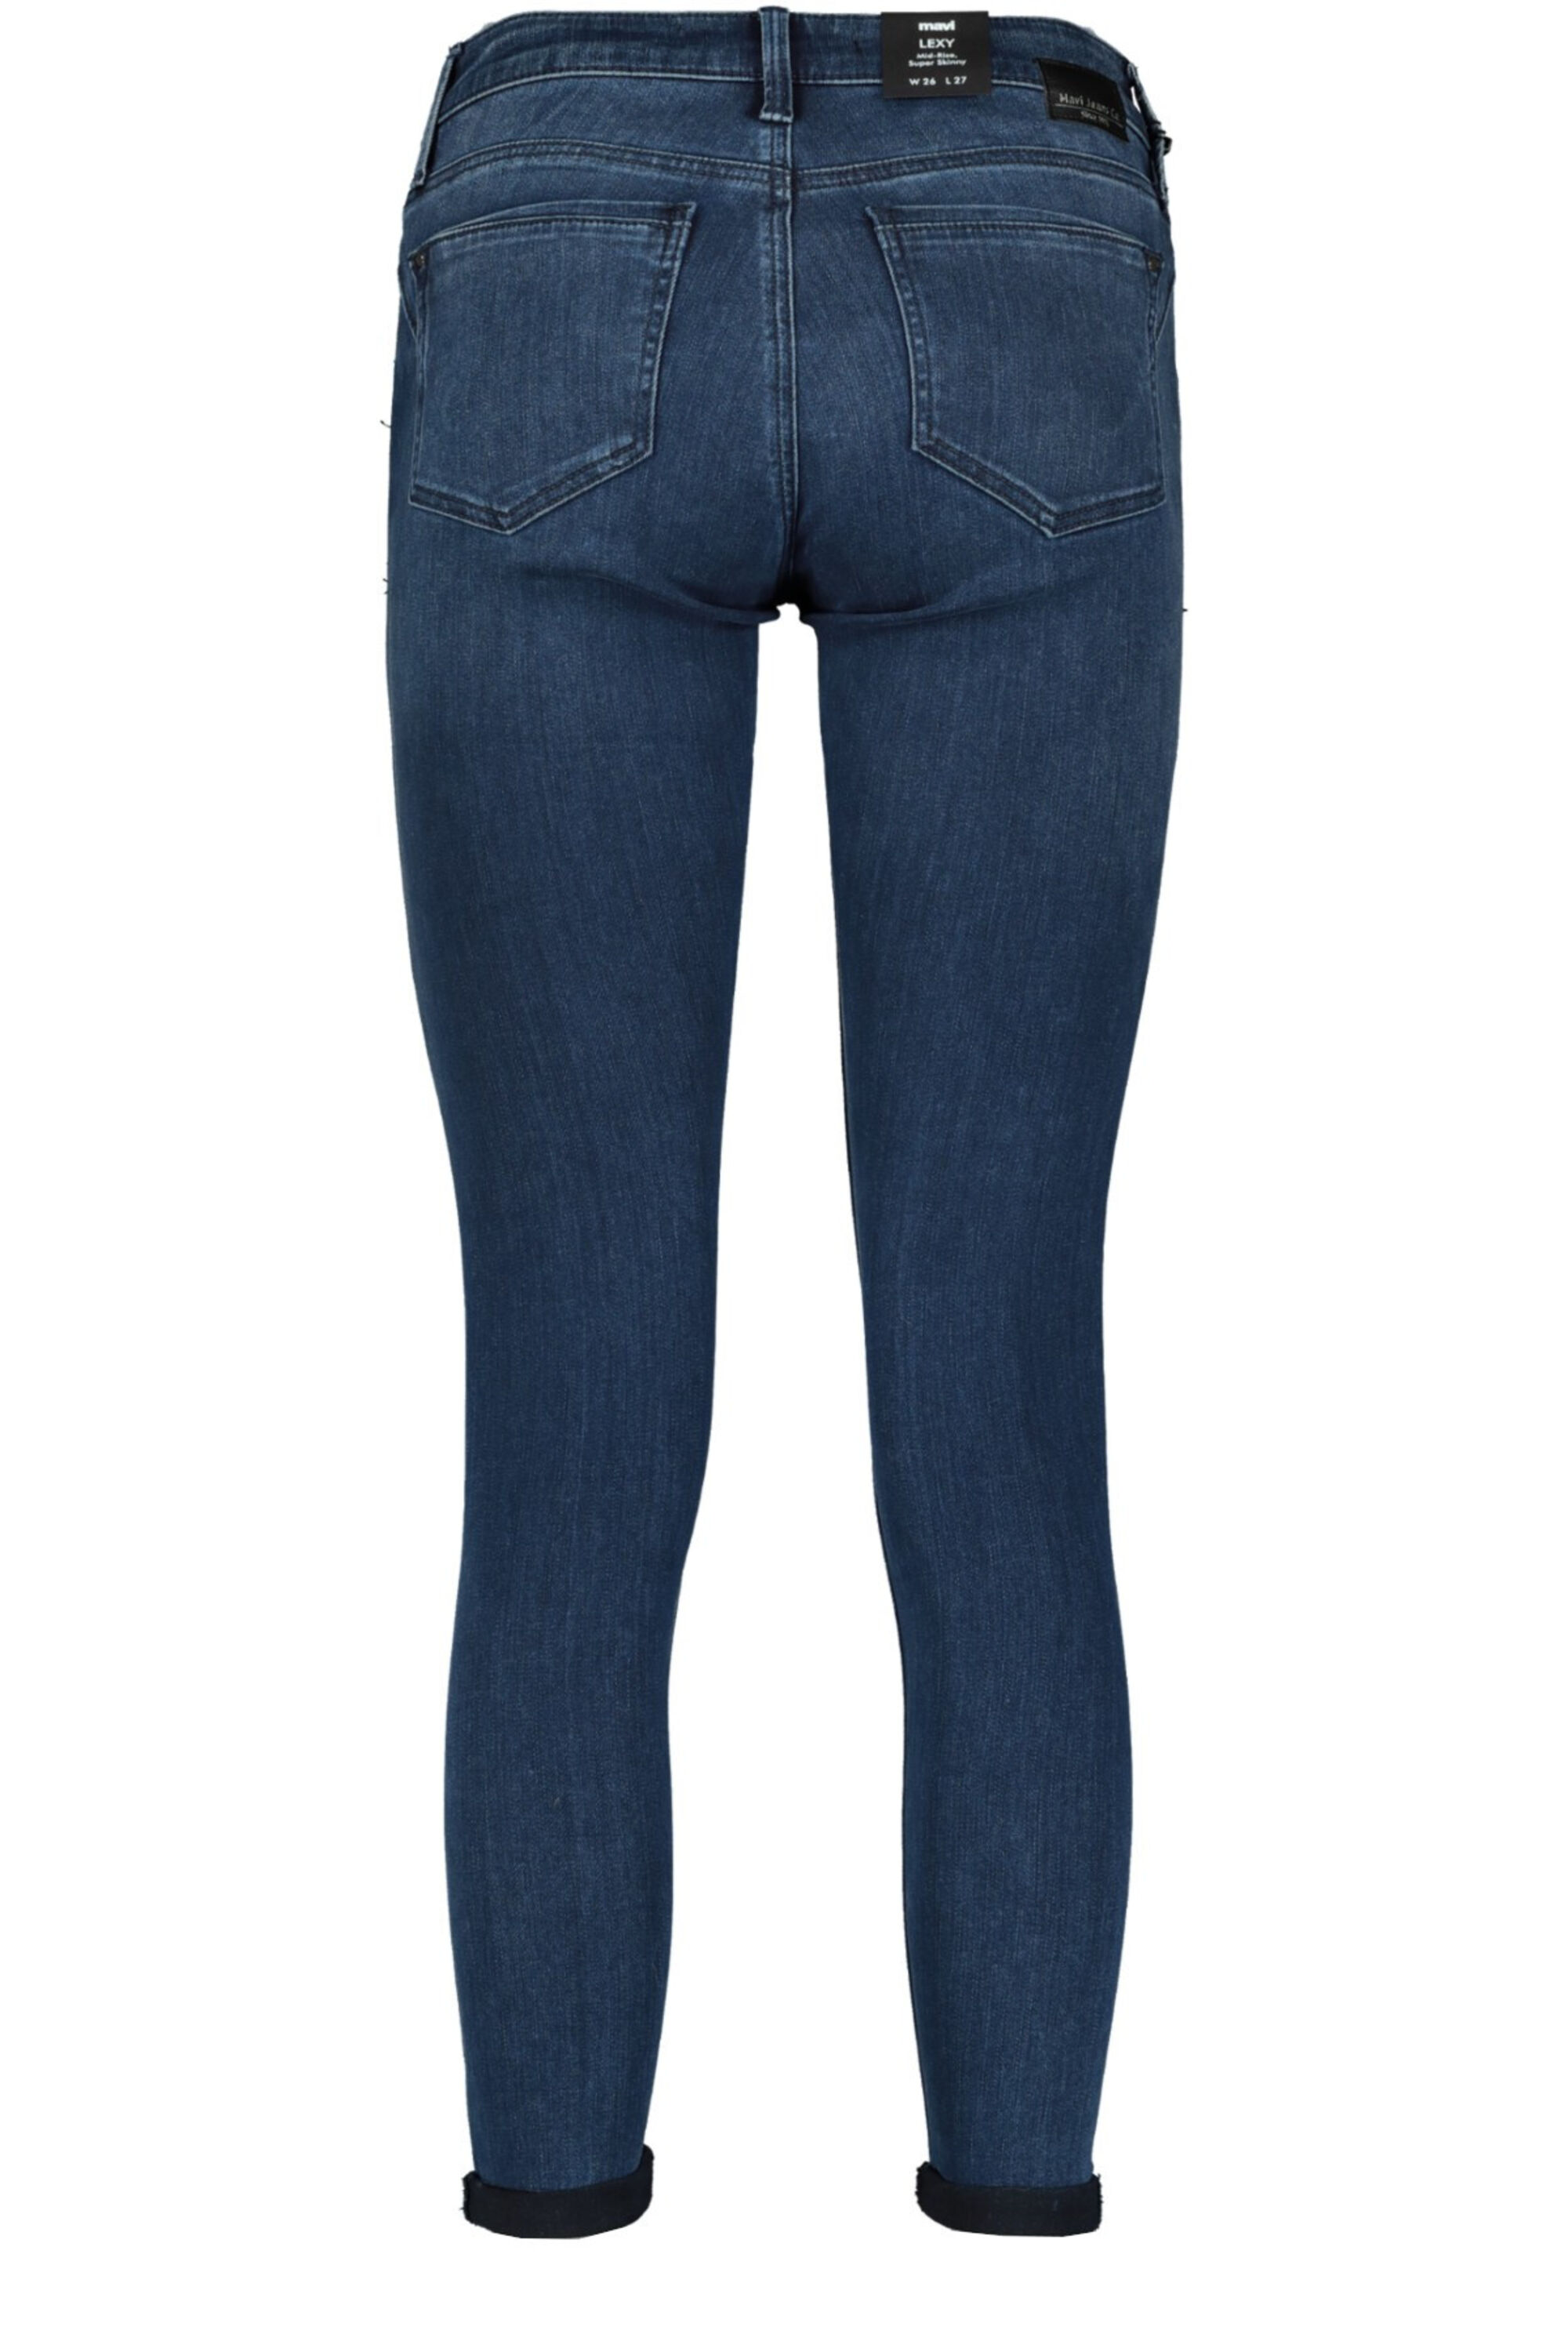 Skinny Jeans Lexy Mavi Bei Mode Löning